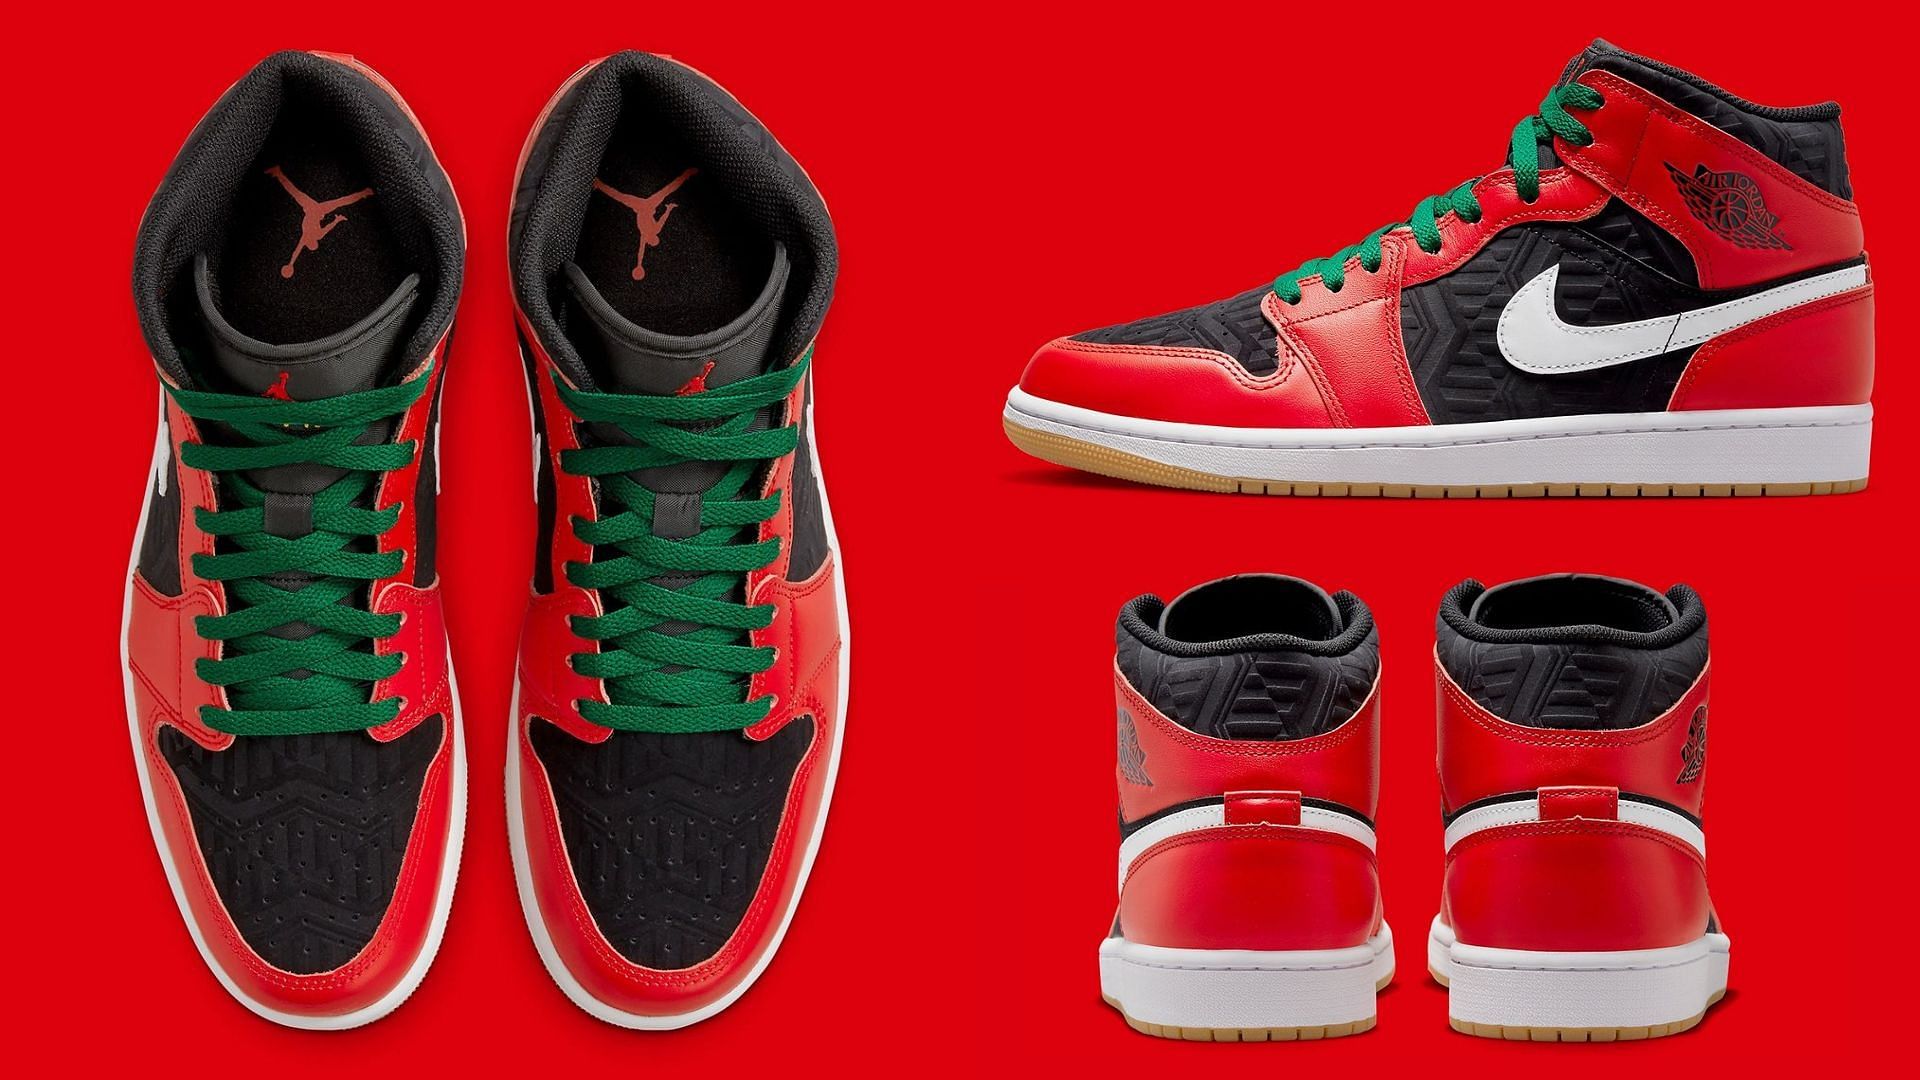 Where upcoming jordan 1 to buy Air Jordan 1 Mid and Low Christmas colorways? Price